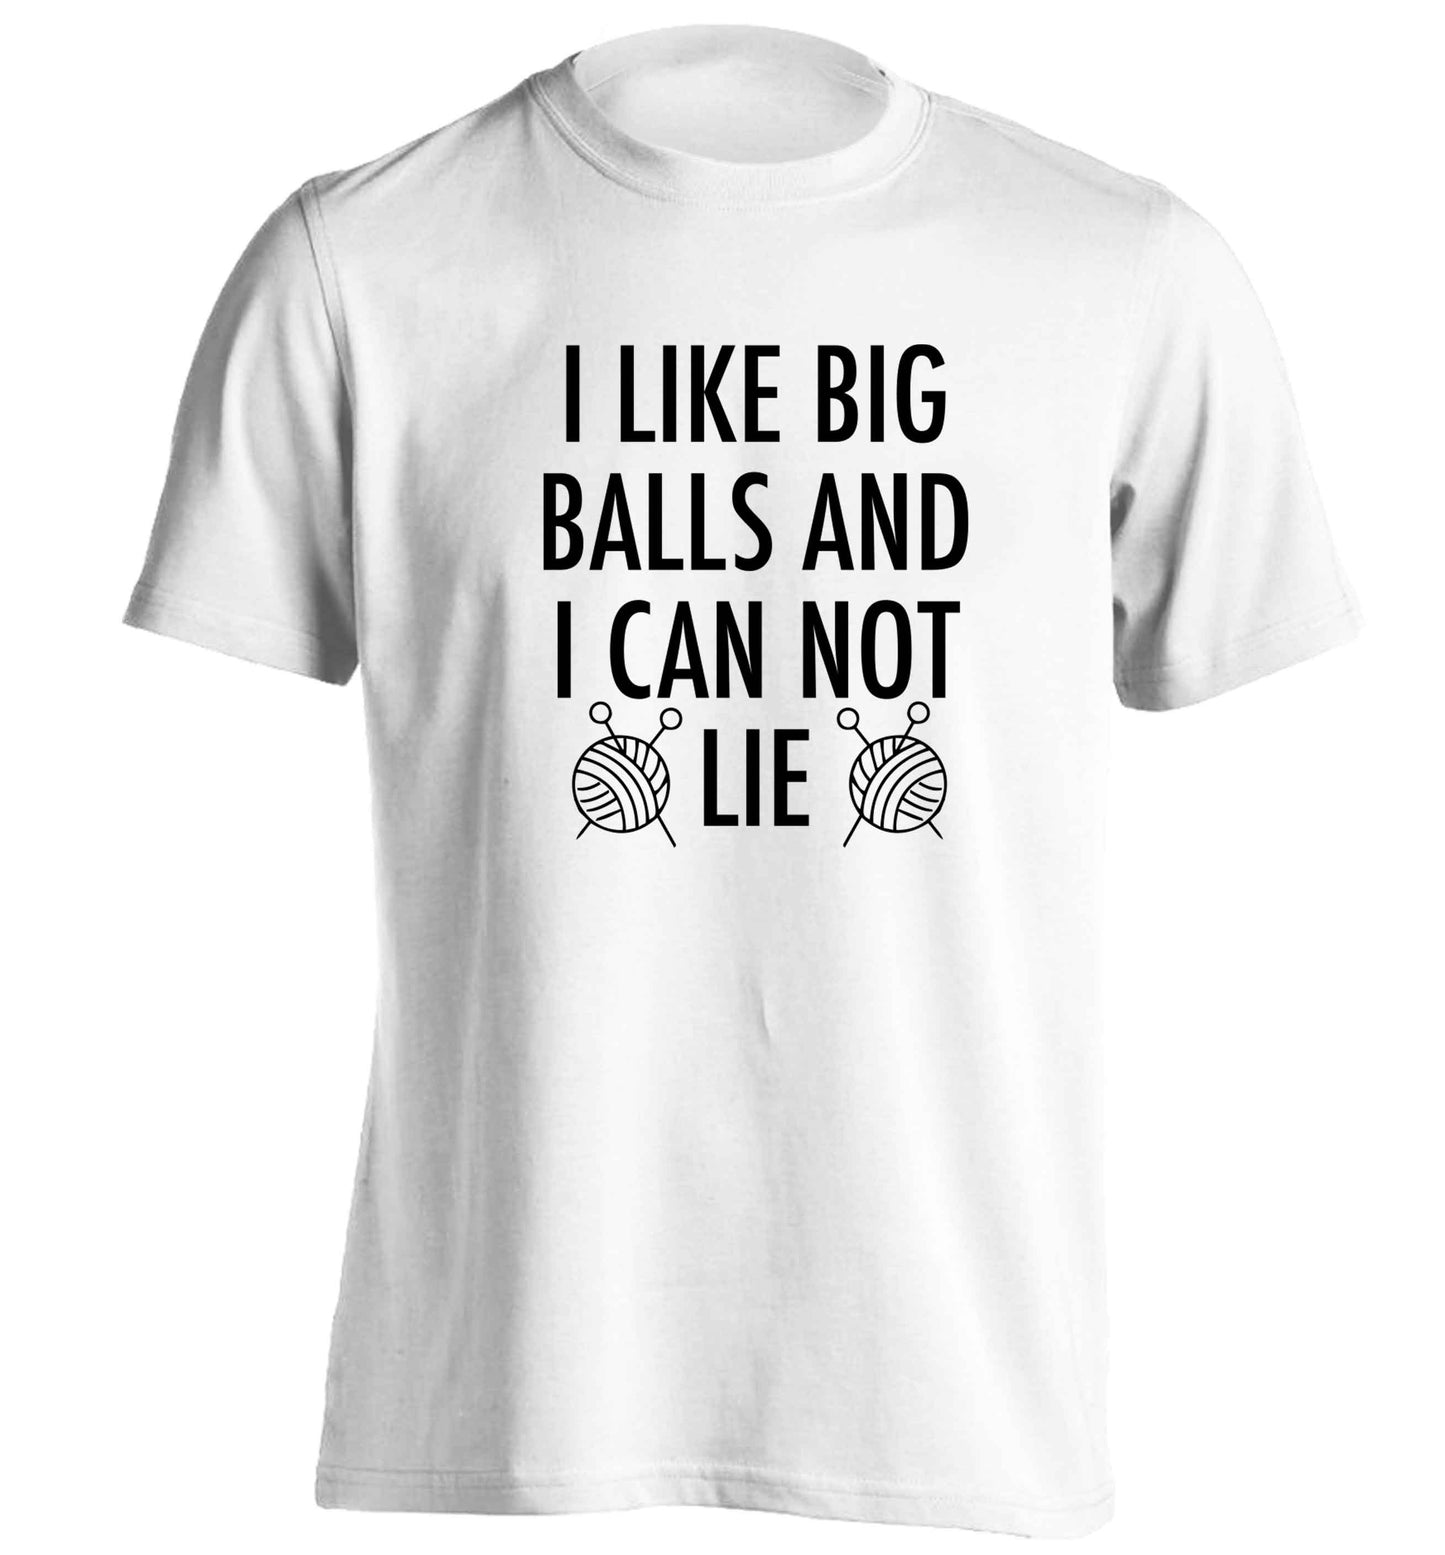 I like big balls and I can not lie adults unisex white Tshirt 2XL